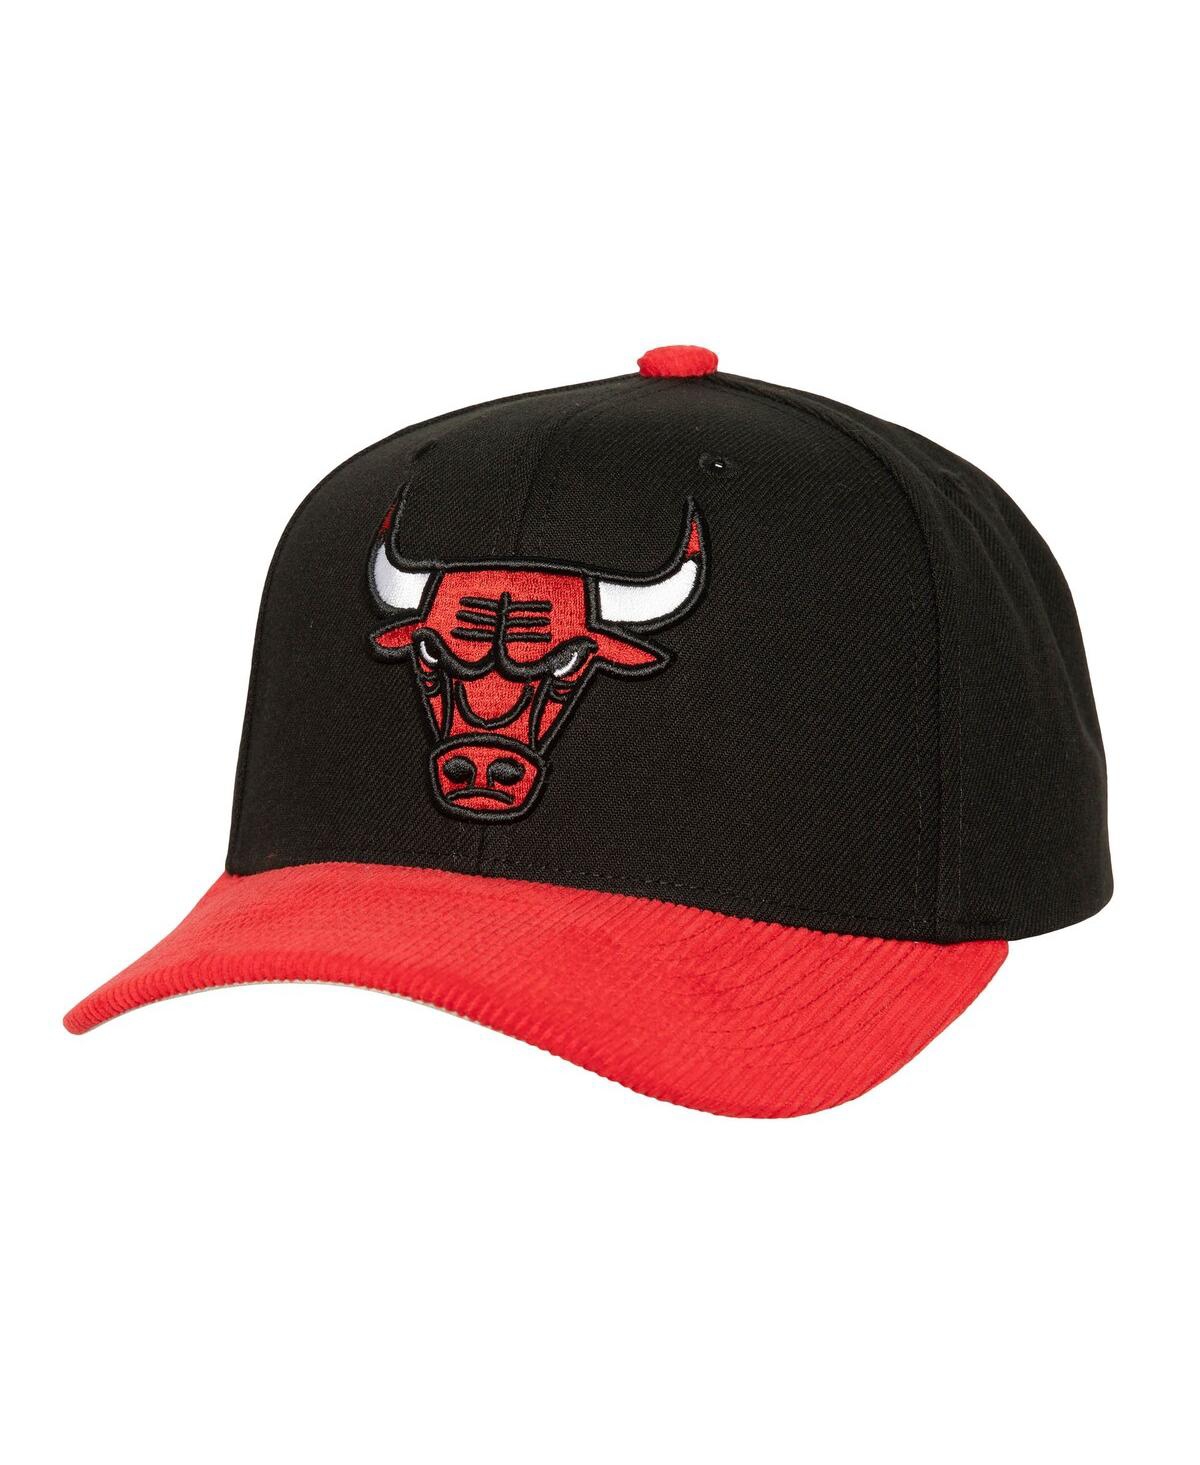 Men's Mitchell & Ness Black Distressed Chicago Bulls Corduroy Pro Crown Adjustable Hat - Black